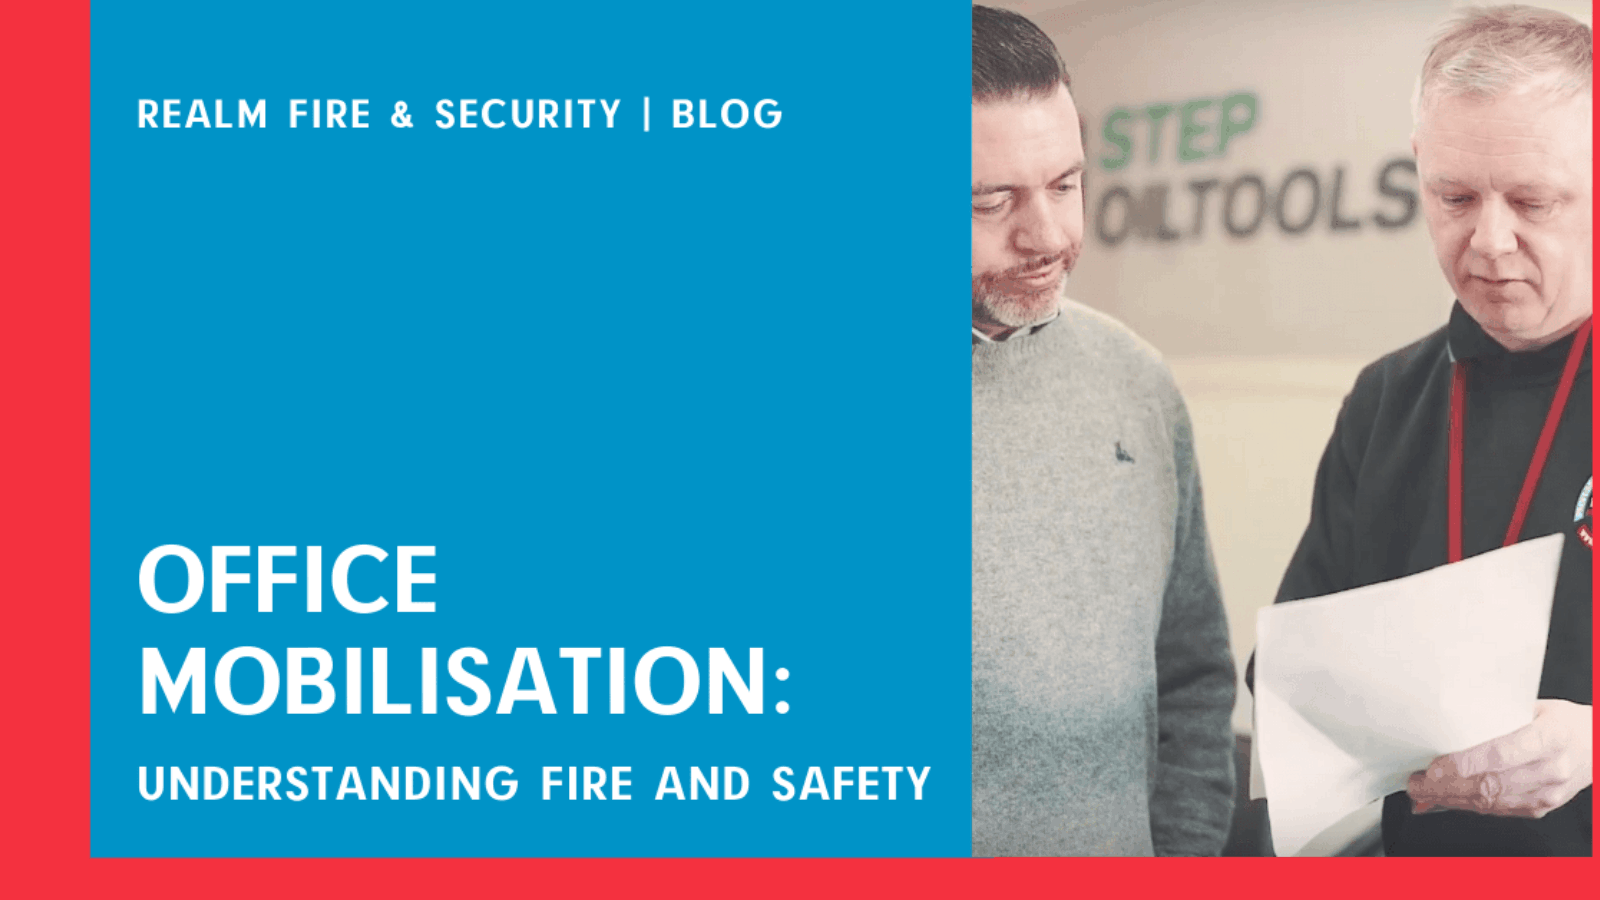 Office mobilisation: understanding fire safety